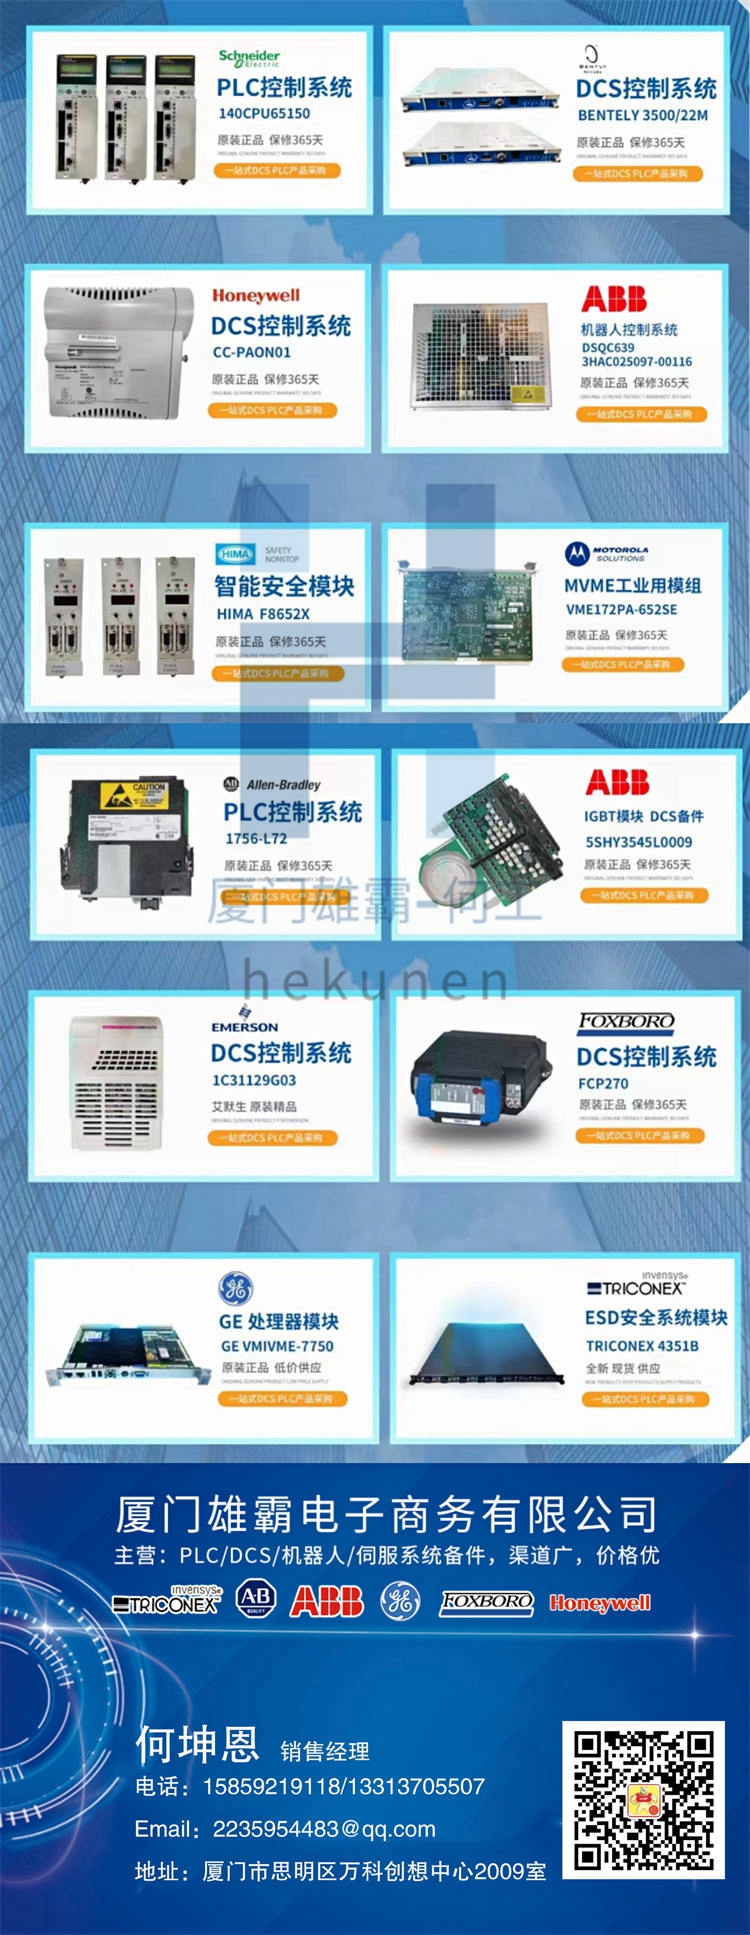 CI855-1 PLC控制器ABB 输入输出模块-备件销售 